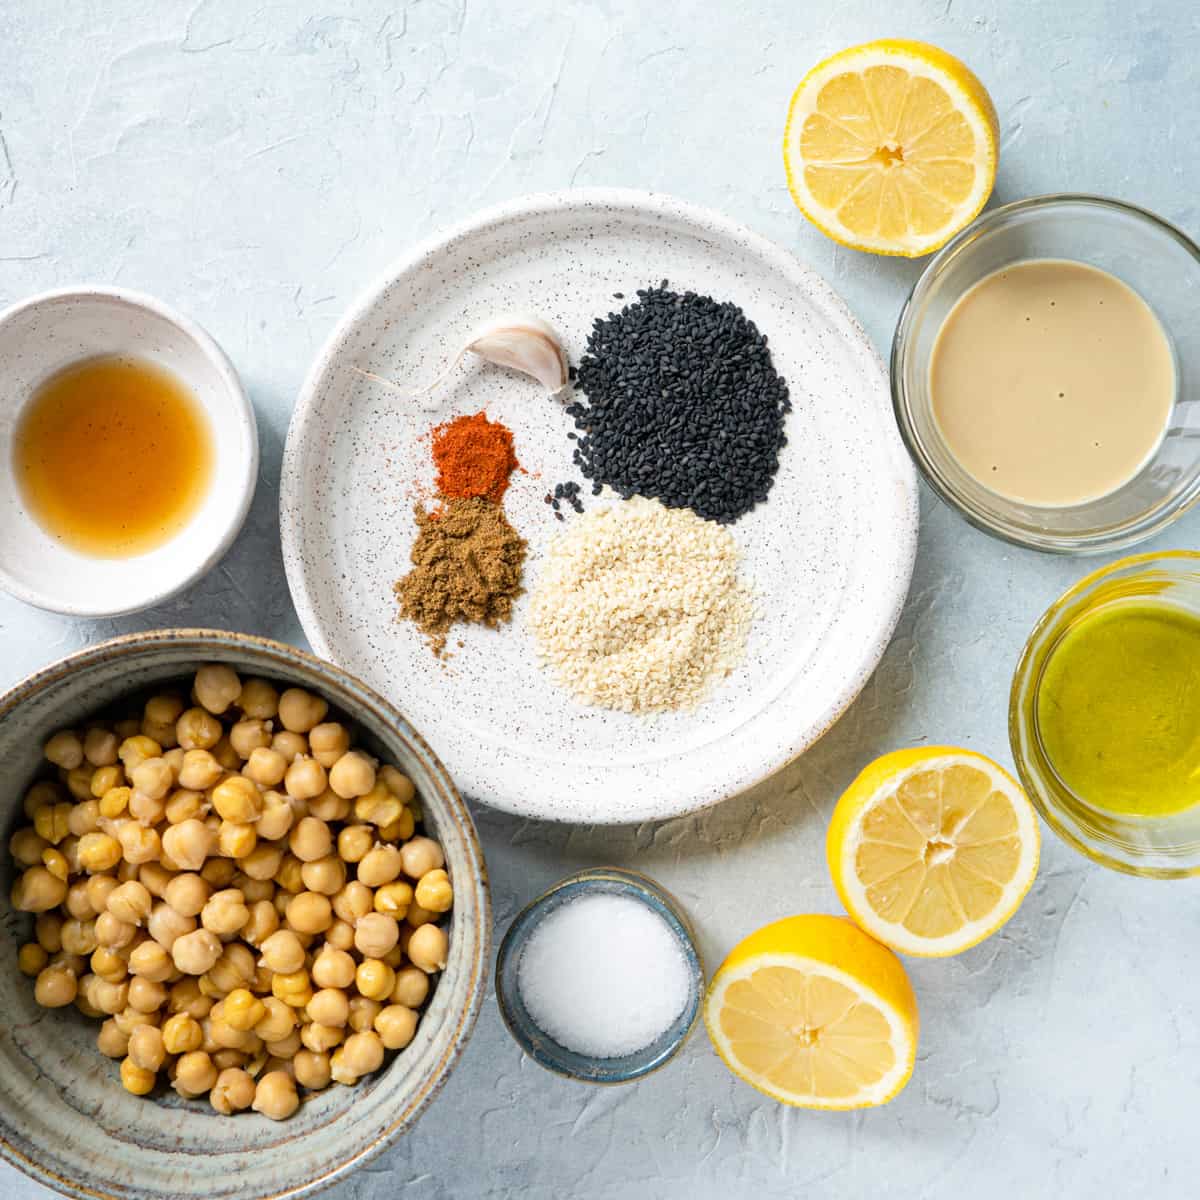 All prepared ingredients to make toasted sesame hummus.